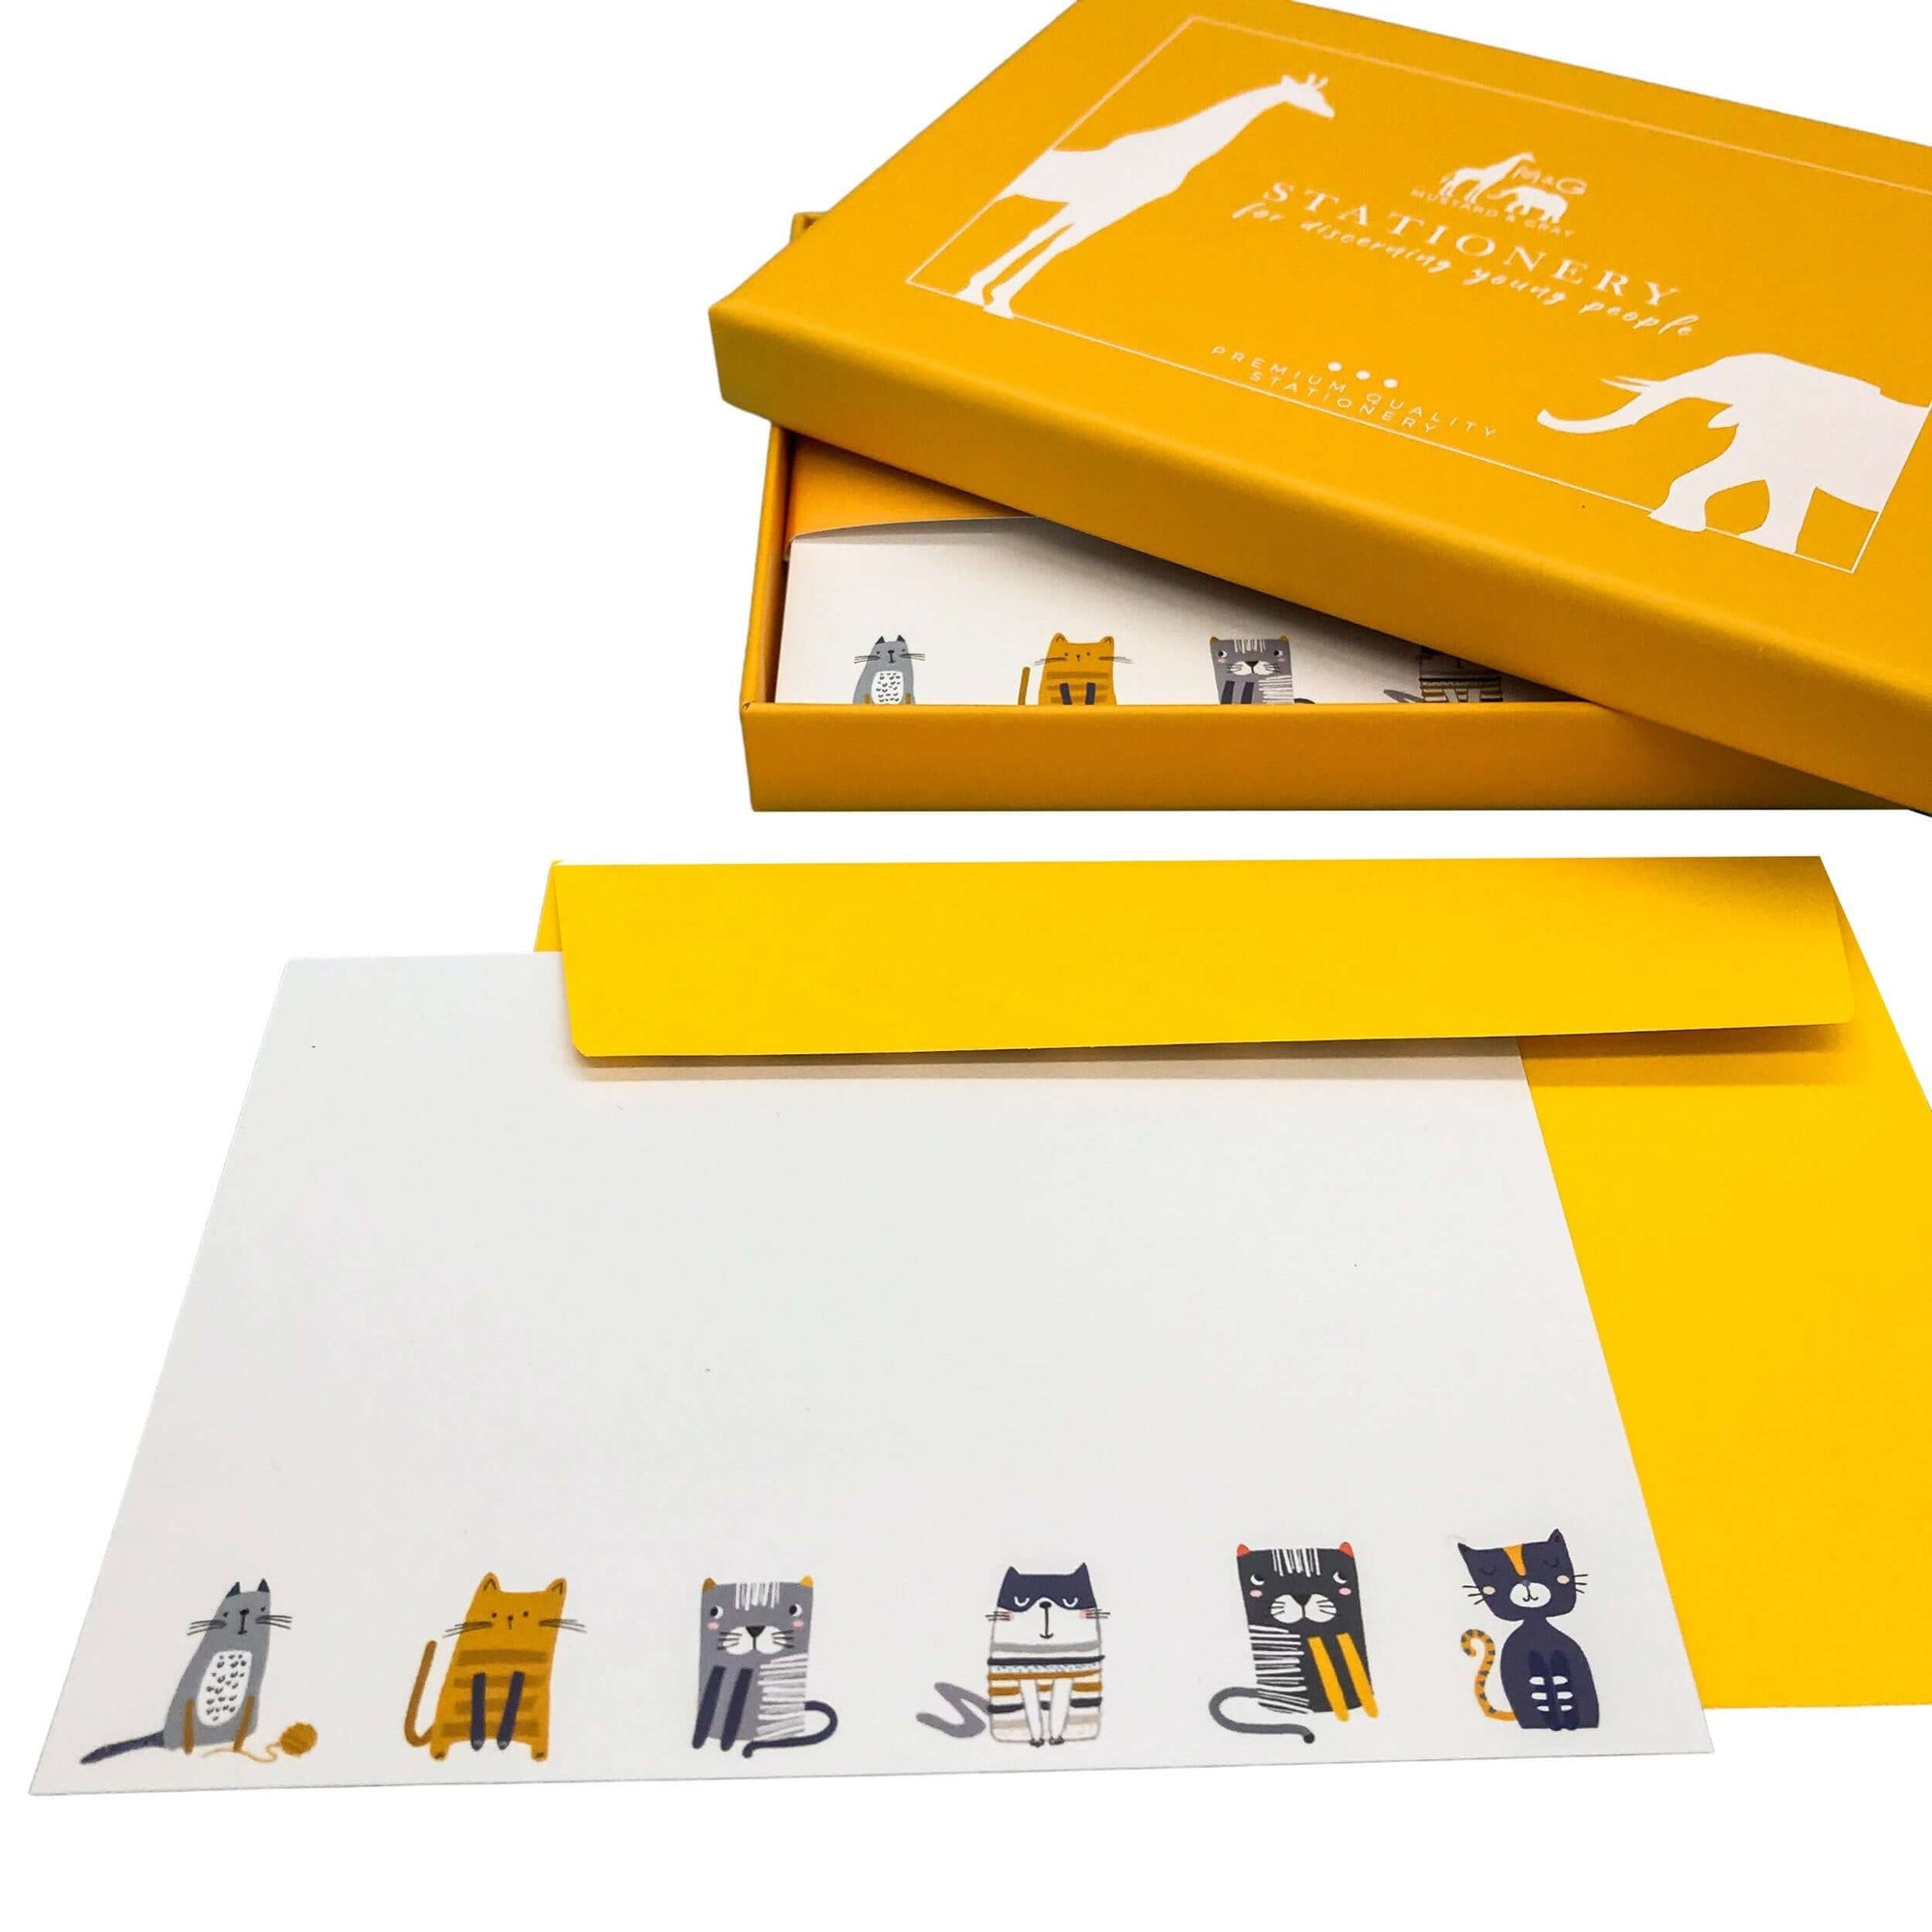 Cats Notecard Set Children's Notecards Mustard and Gray Ltd Shropshire UK